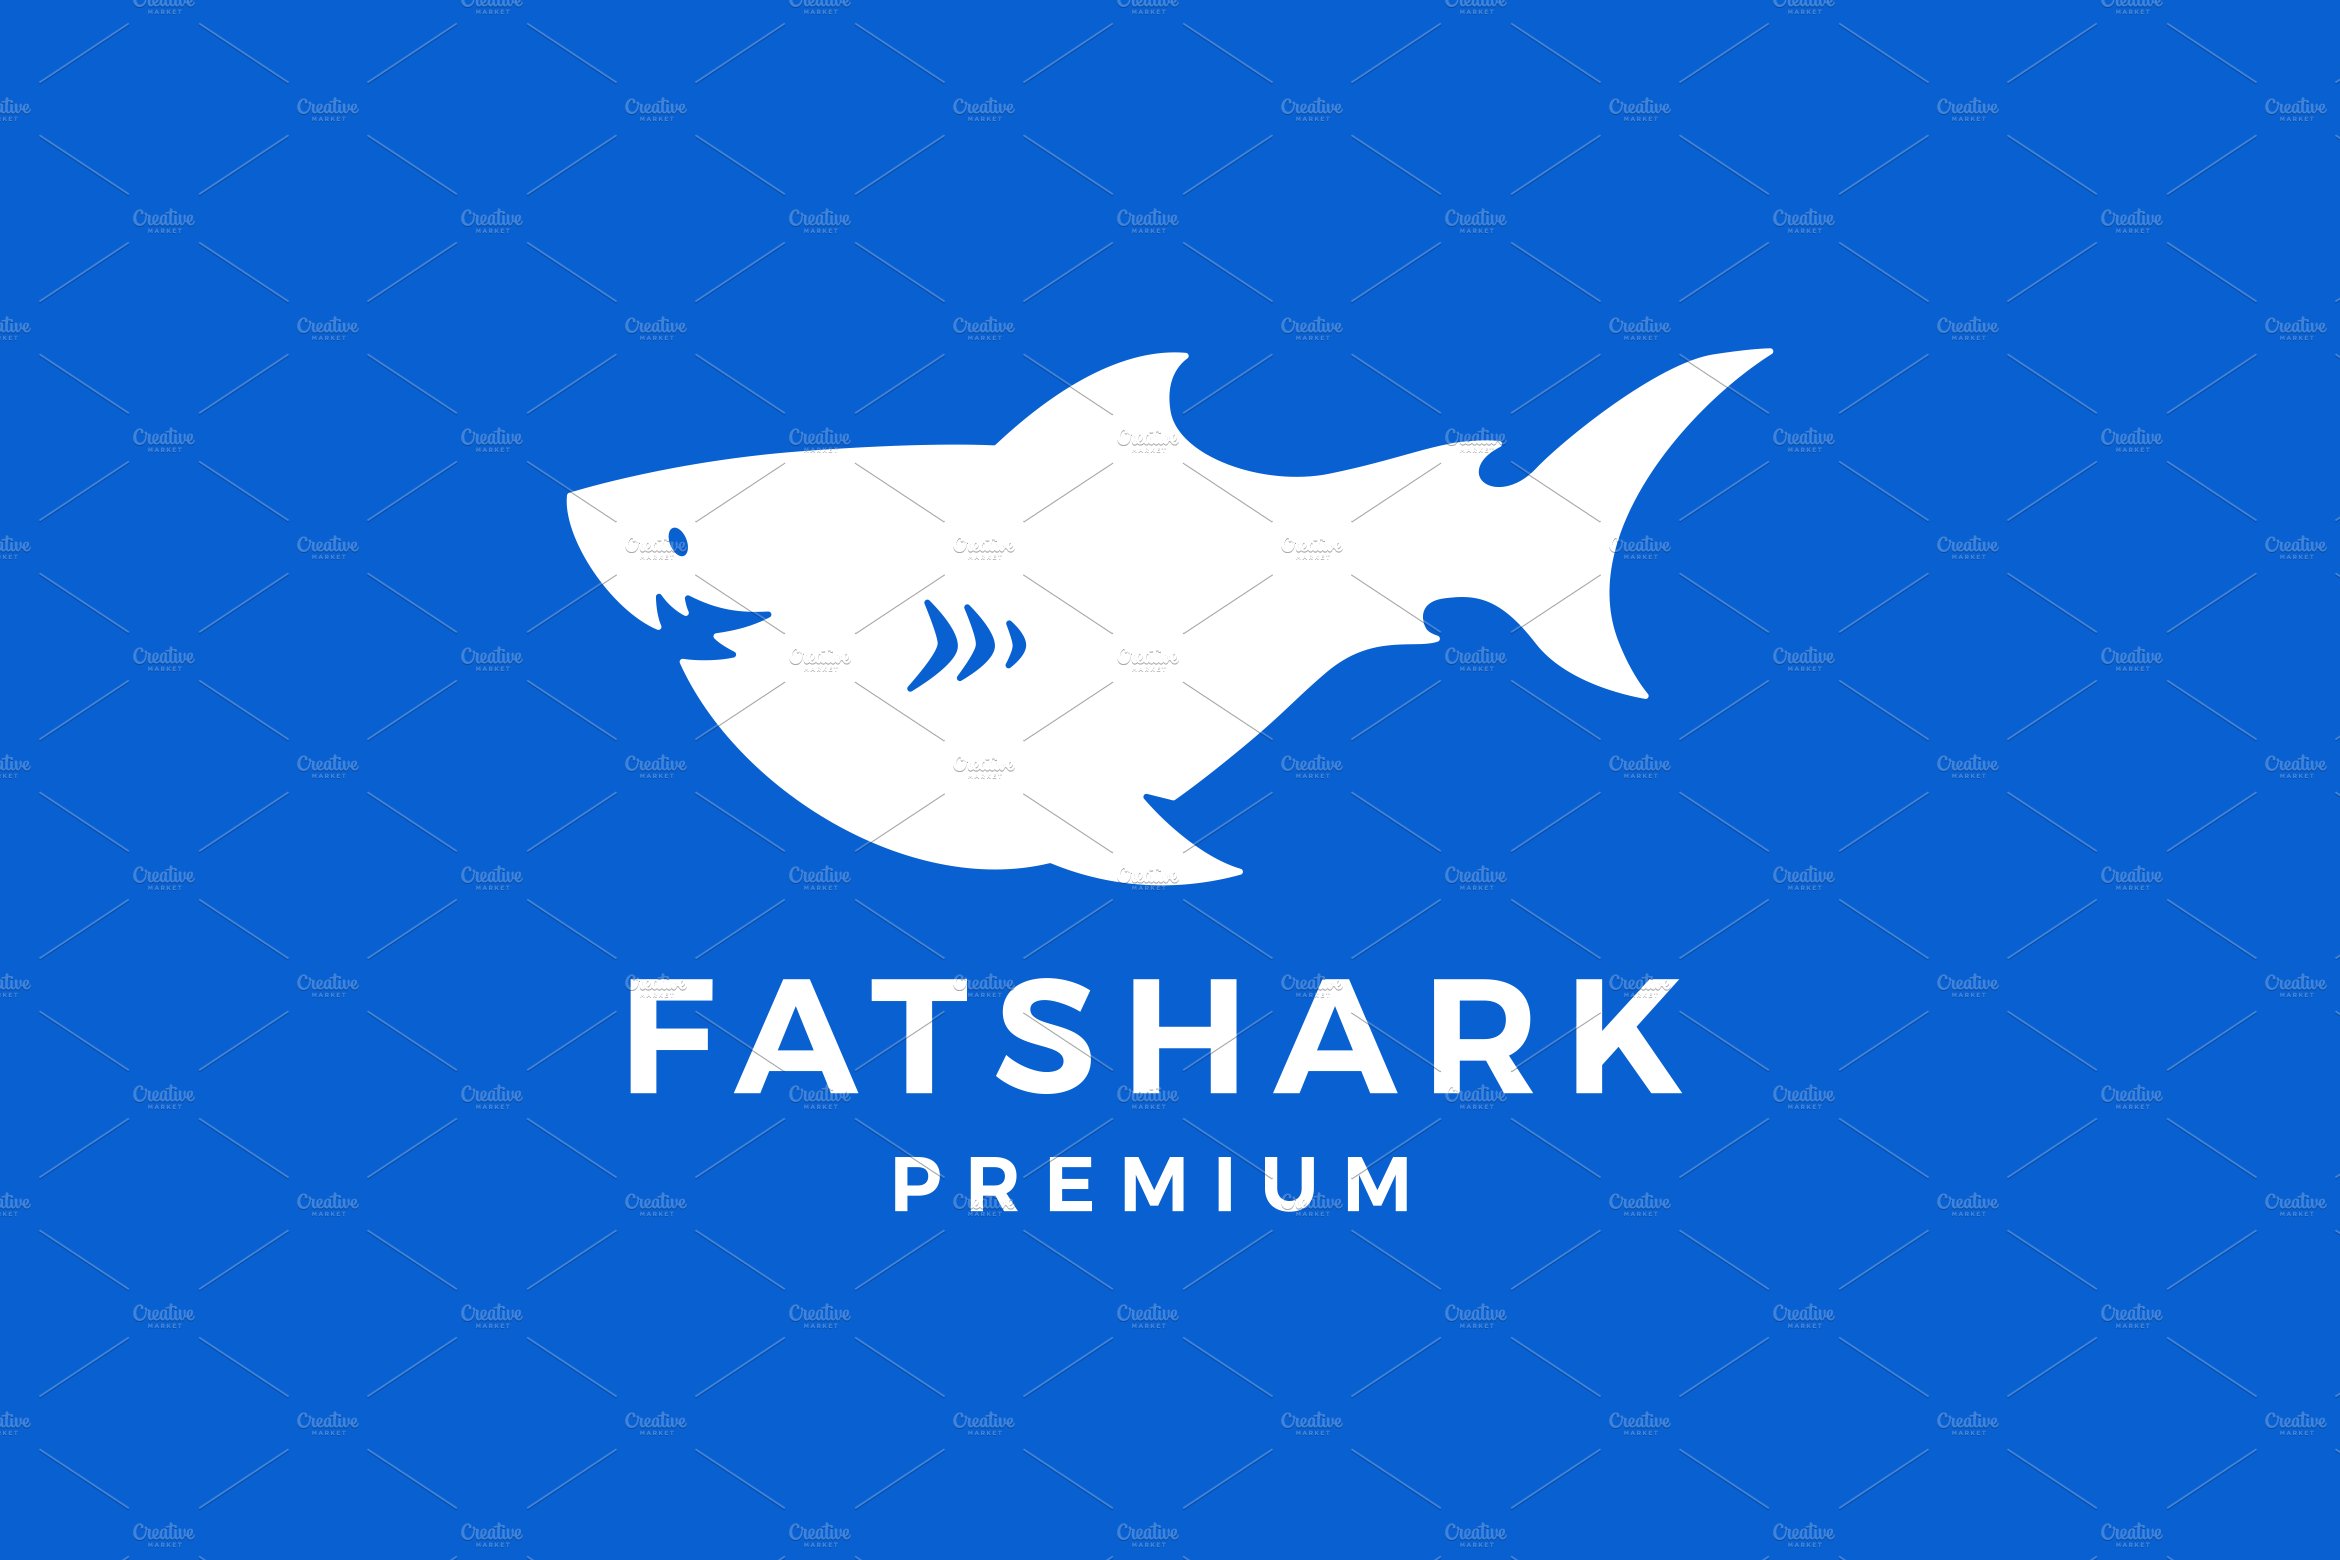 fat shark logo vector icon cover image.